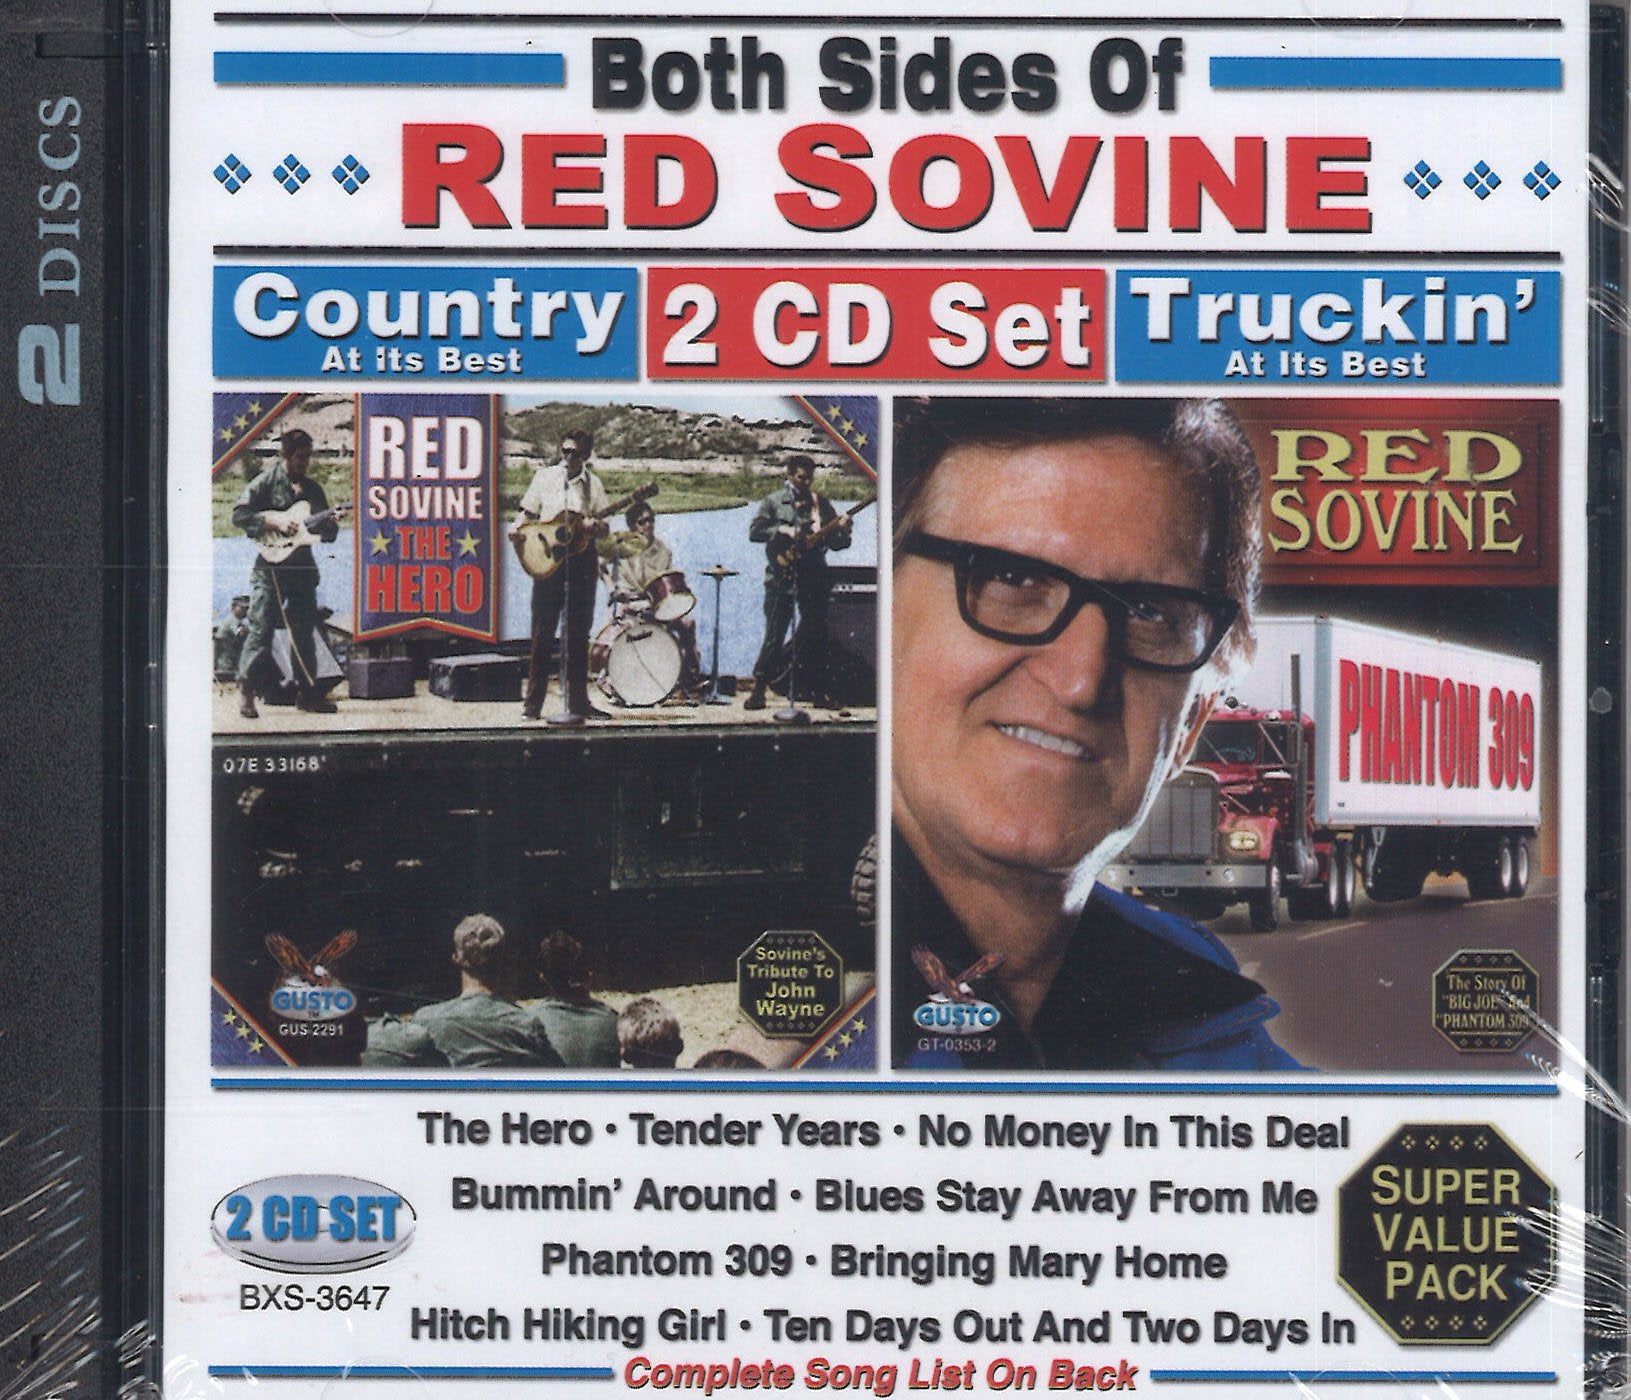 Both Sides Of Red Sovine: 2 CD Set